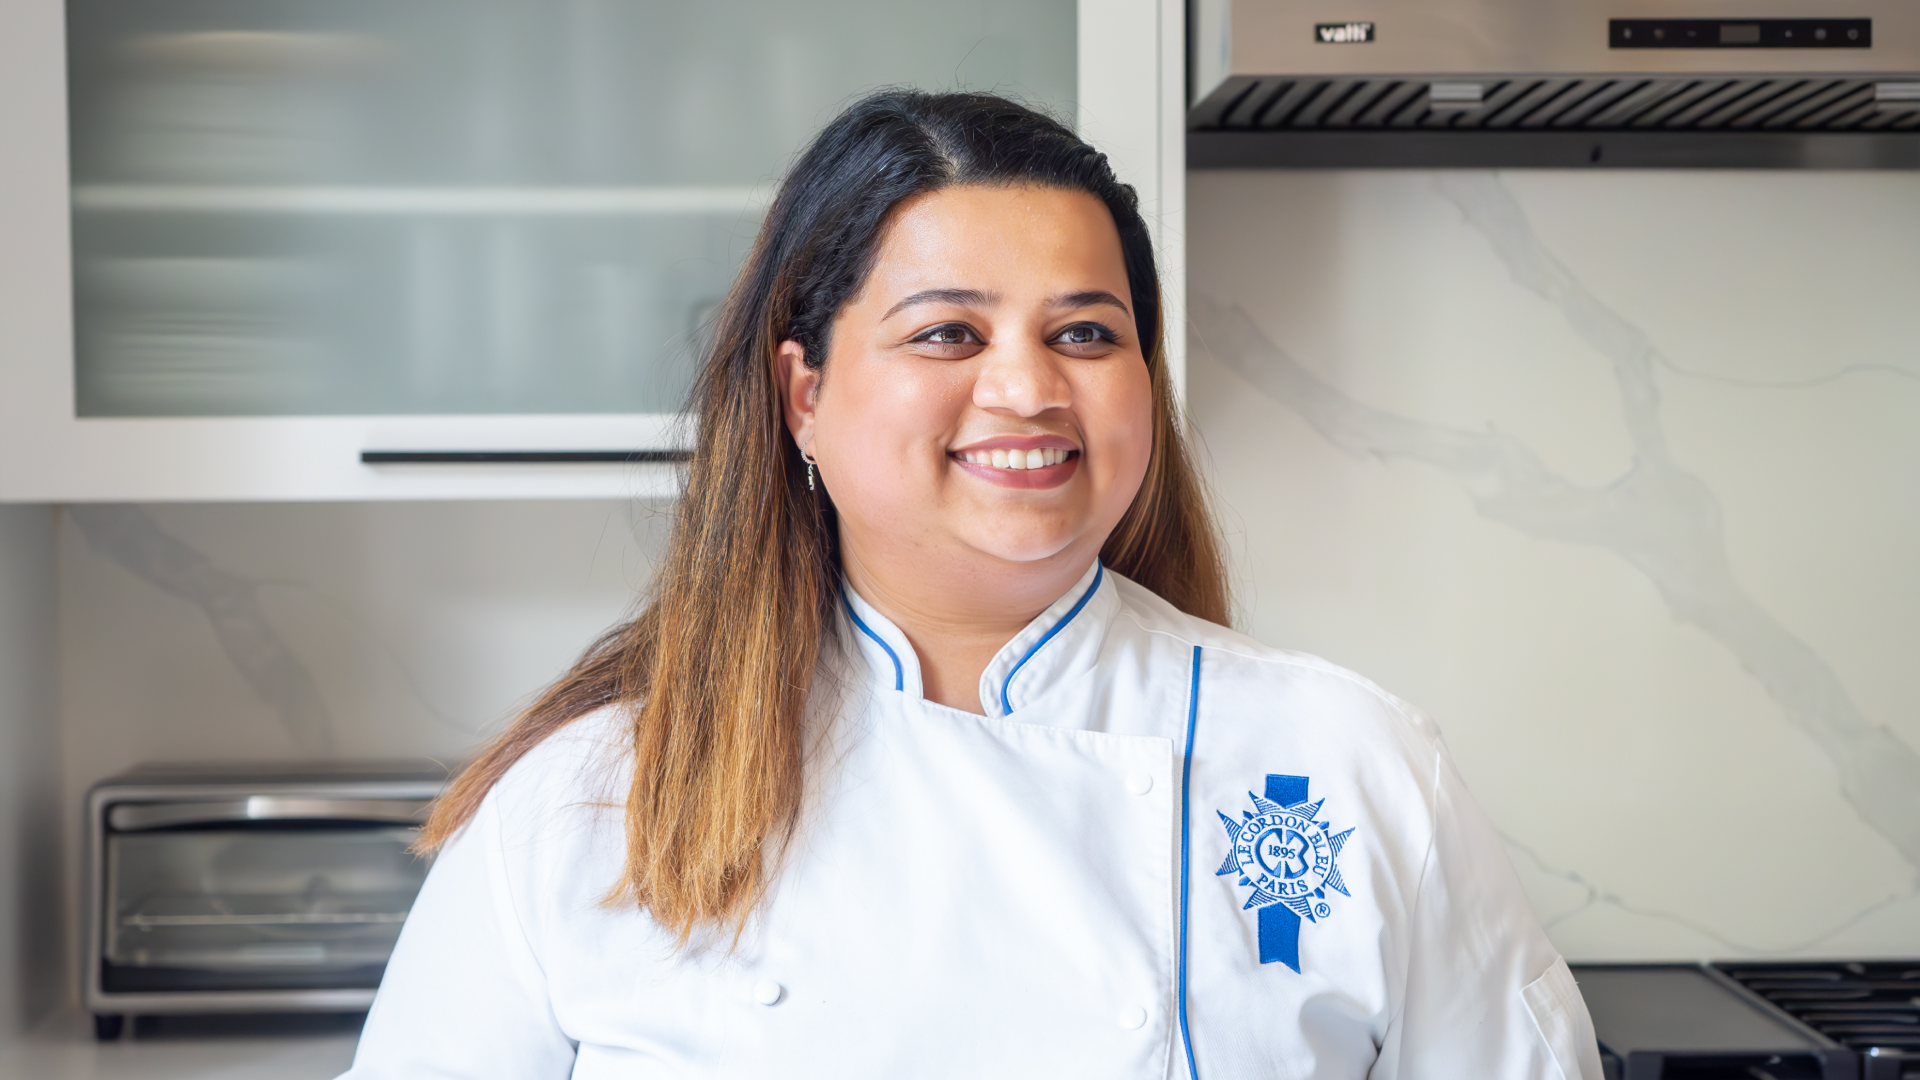 Protected: Chef Spotlight: Aakriti’s Journey from Le Cordon Bleu to Culinary Entrepreneurship